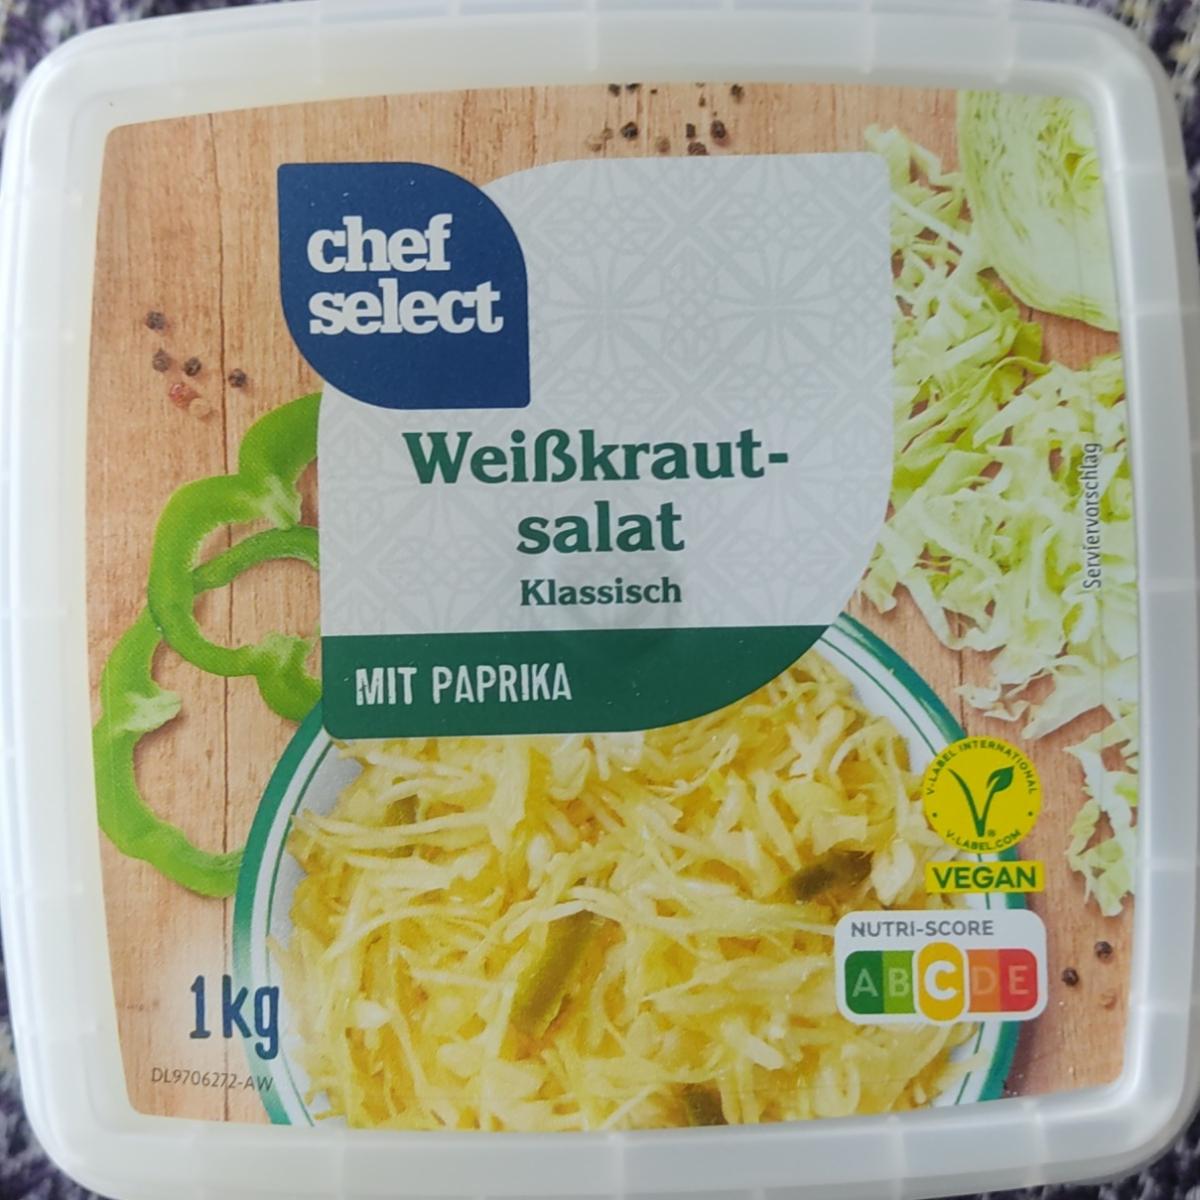 Фото - Weisskraut salat mit paprika Klassisch Chef Select